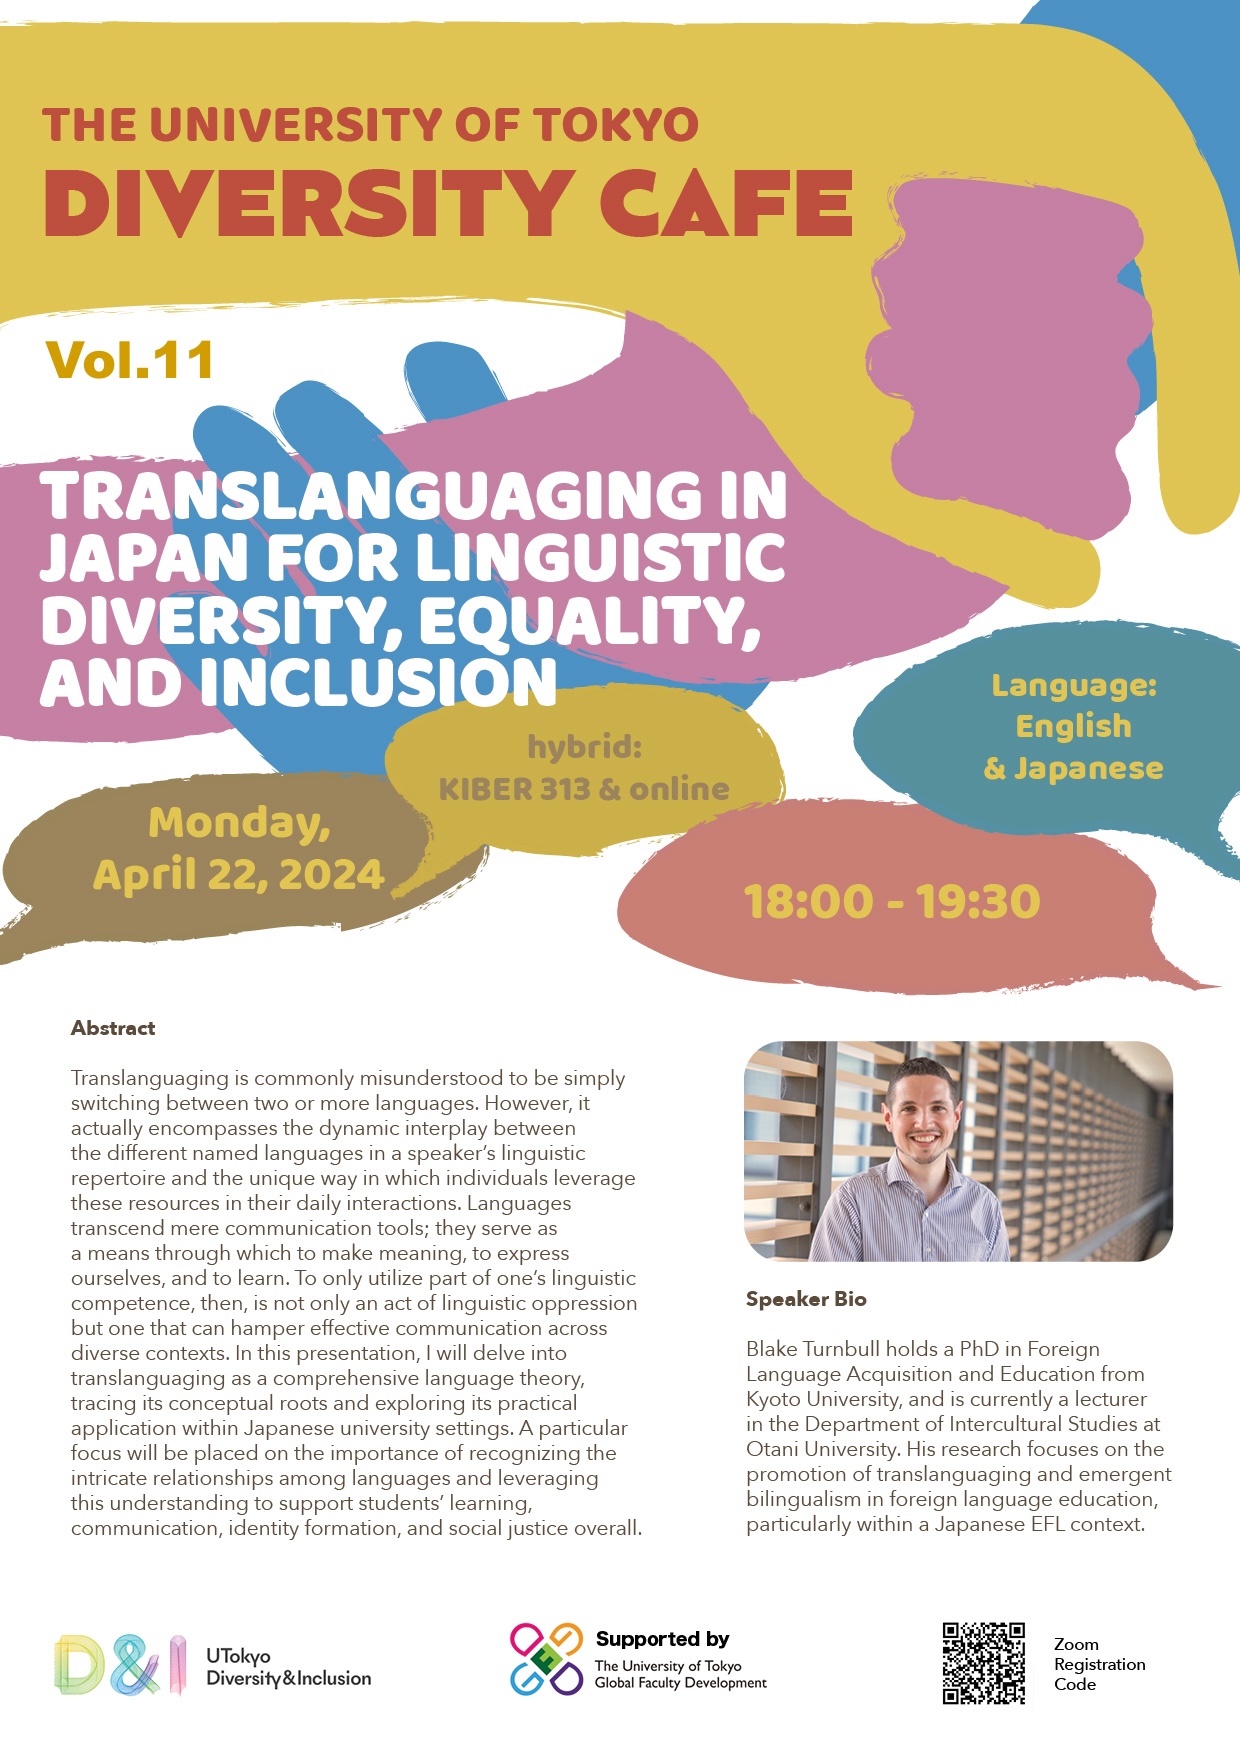 4.22 Diversity Cafe Vol. 11: Translanguaging in Japan for Linguistic Diversity, Equality, and Inclusion ダイバーシティ・カフェ Vol. 11: 日本におけるトランスランゲージング：言語の多様性、平等性、包括性のために